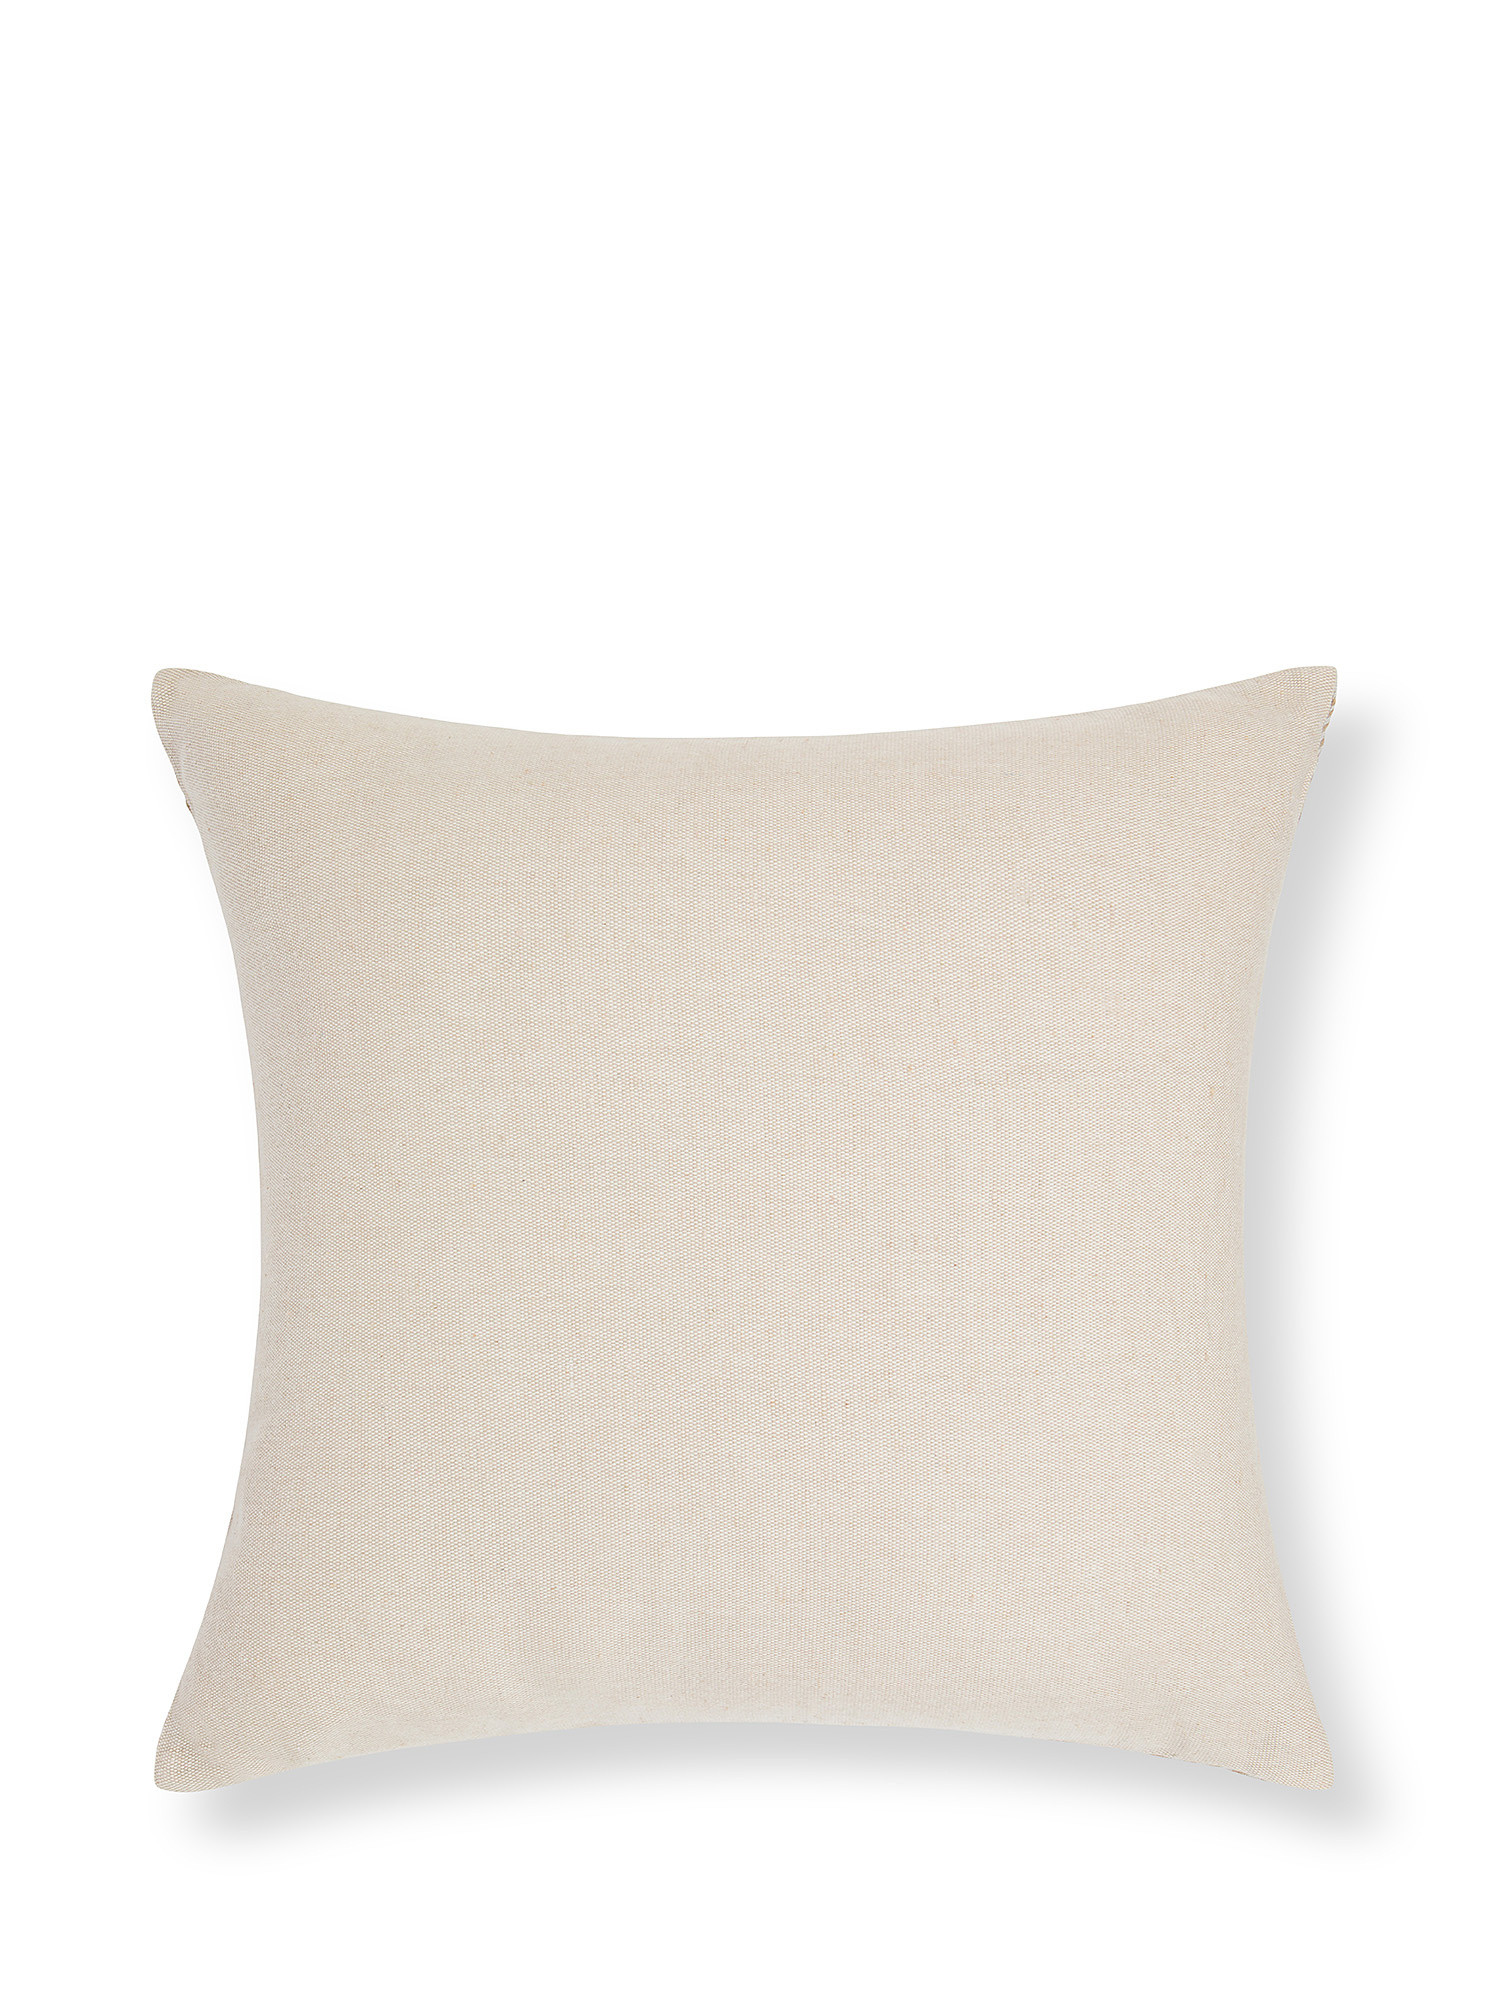 50x50 cm jacquard cotton cushion, White / Beige, large image number 1